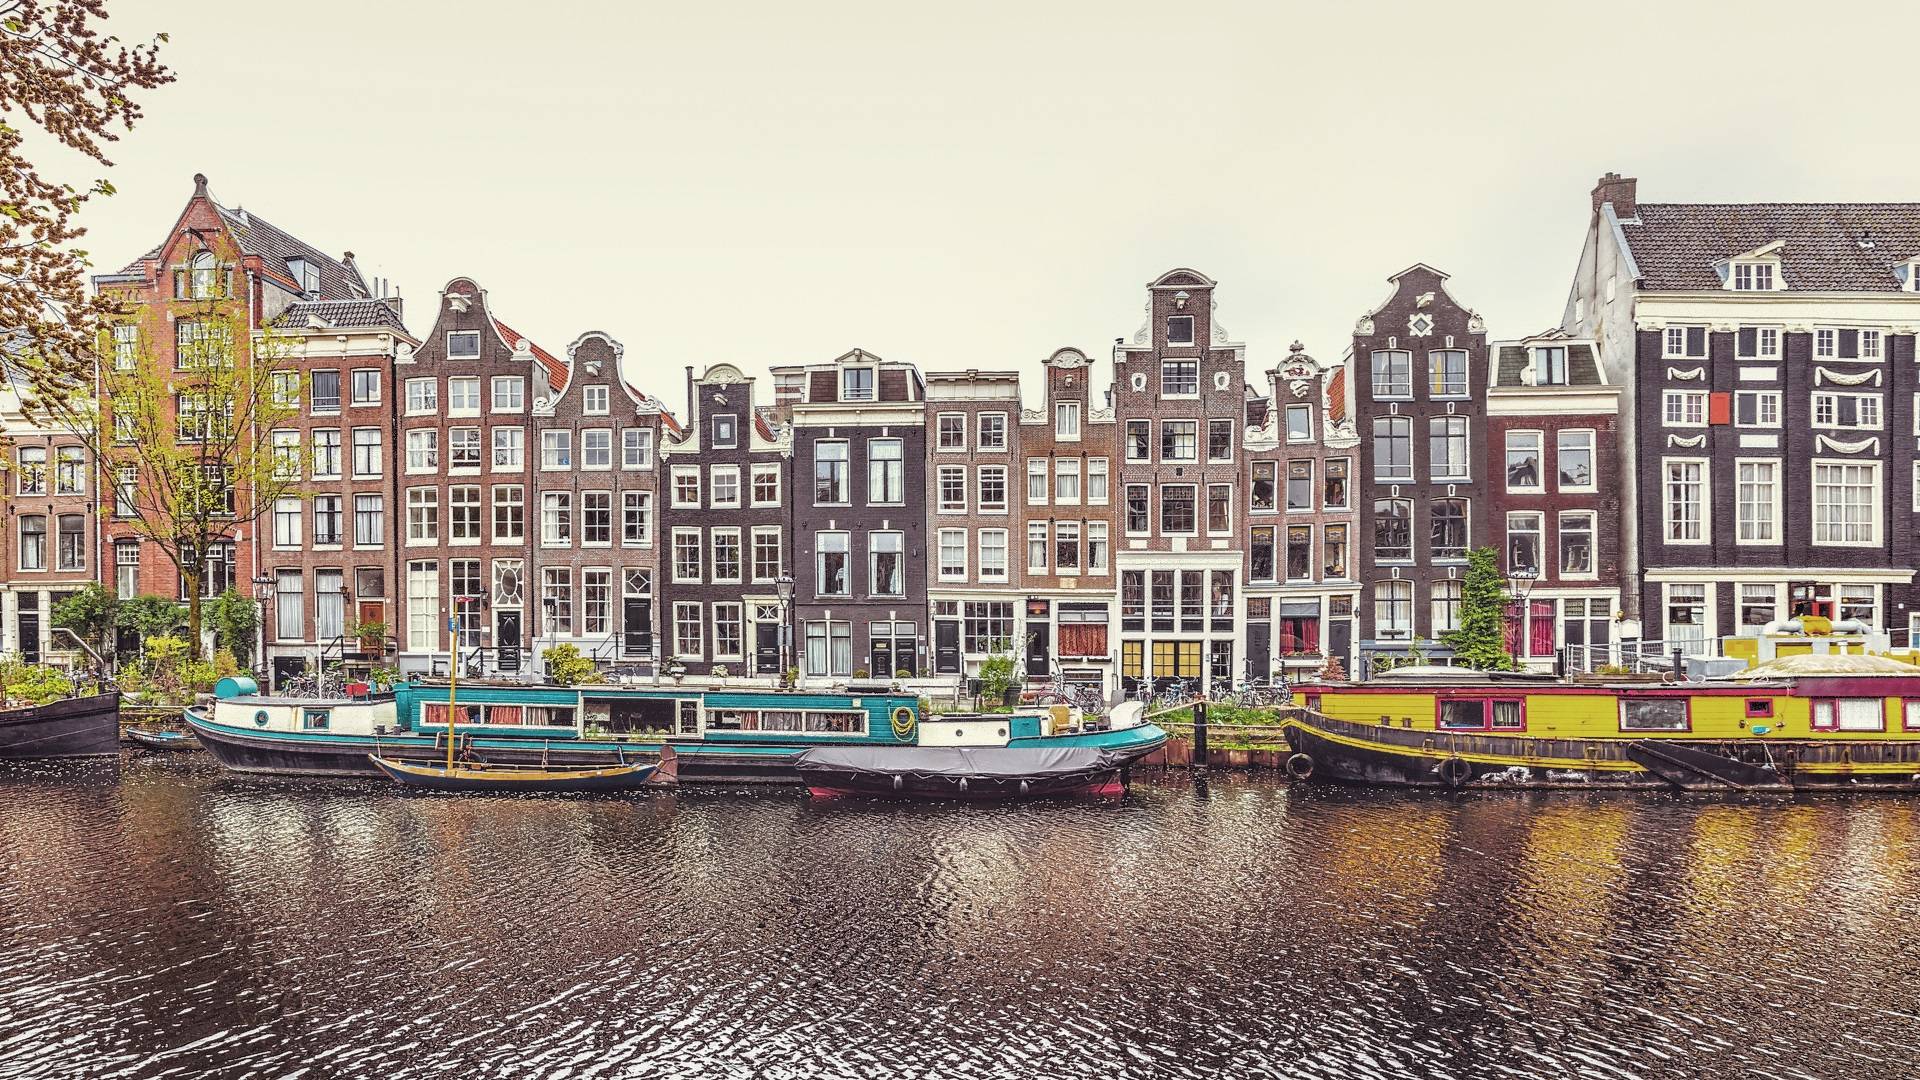 Dancing houses Amsterdam Amstel_HDR2